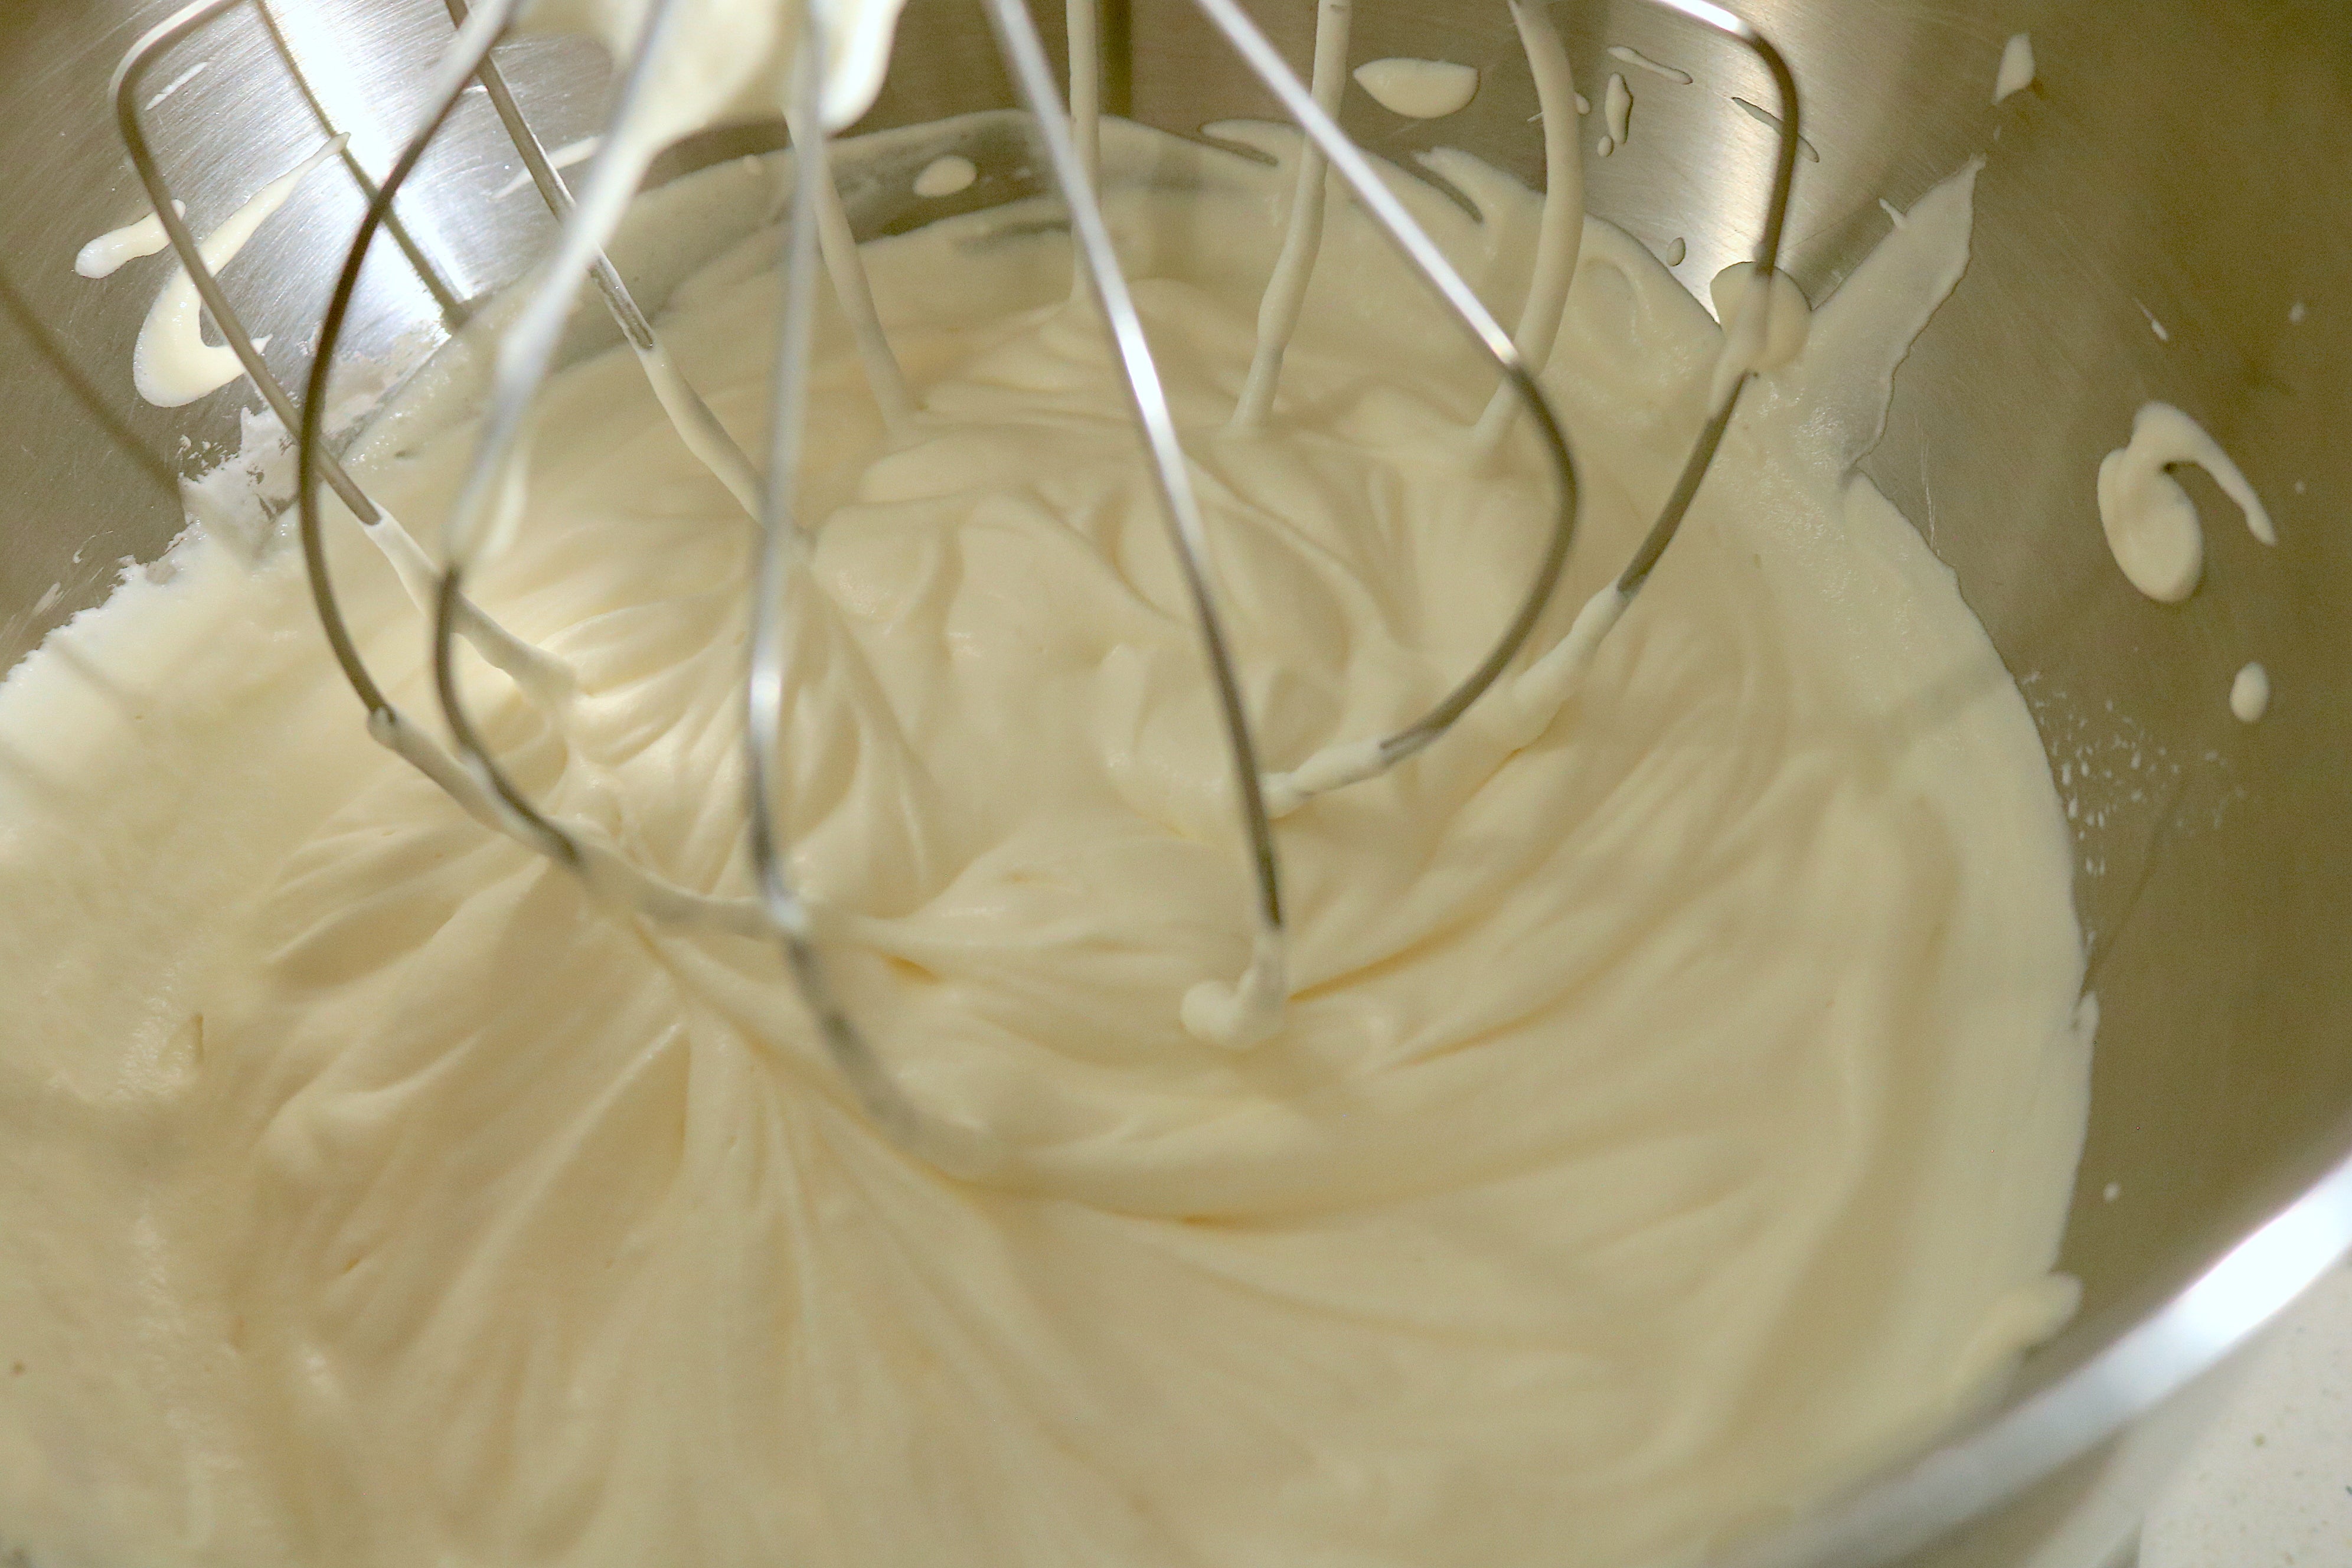 What medium peak whipped cream looks like while whisking. (Photo: Allie Chanthorn Reinmann)